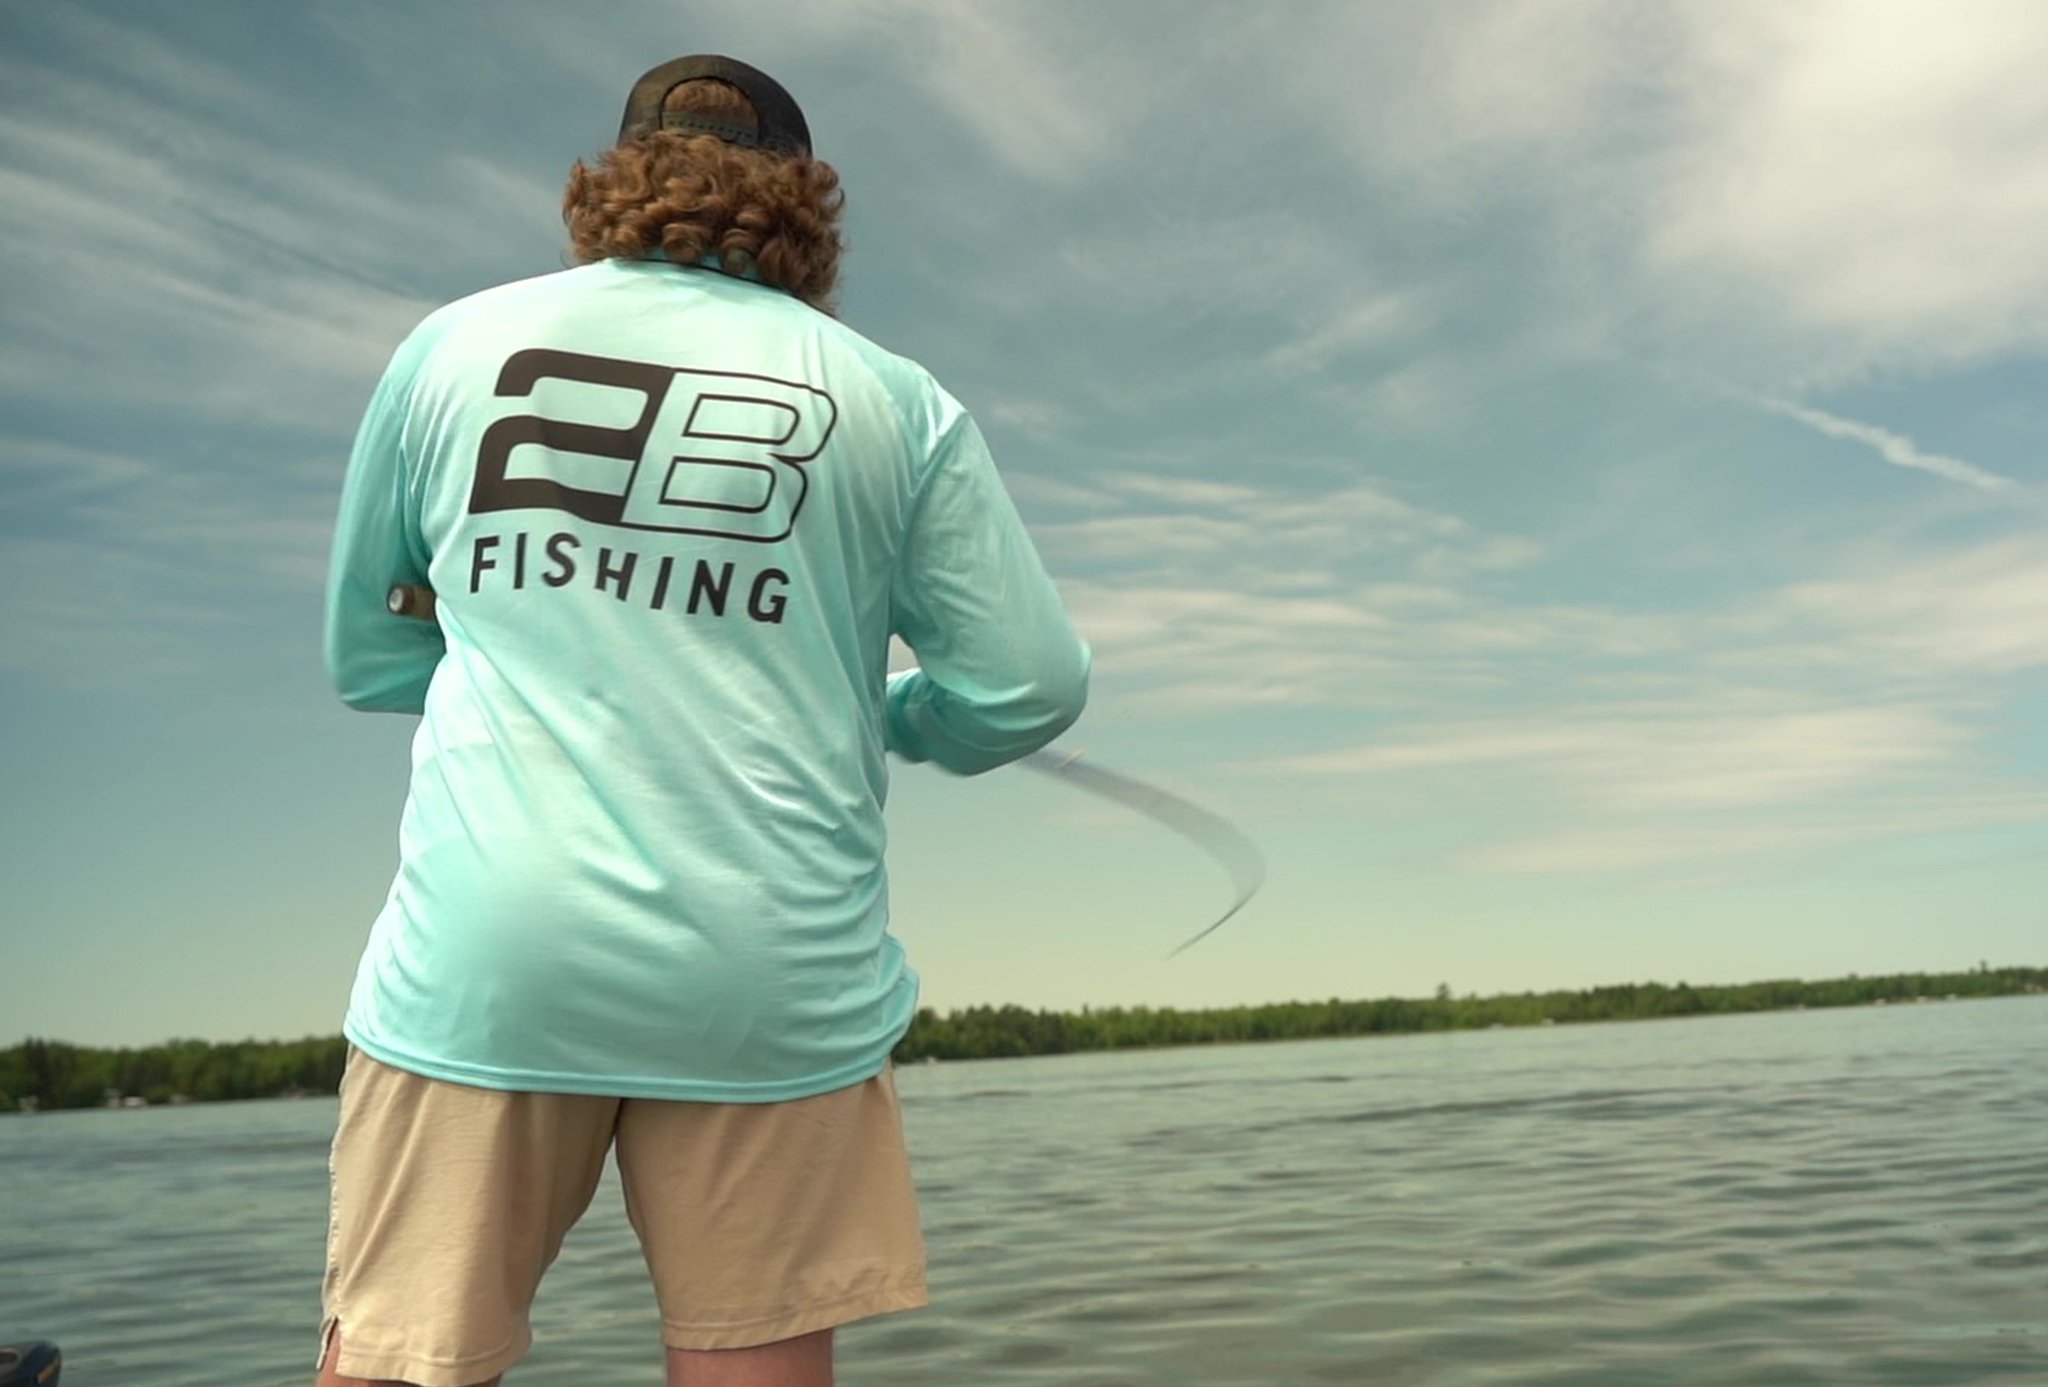 angler wearing 2B Fishing apparel reeling in a fish